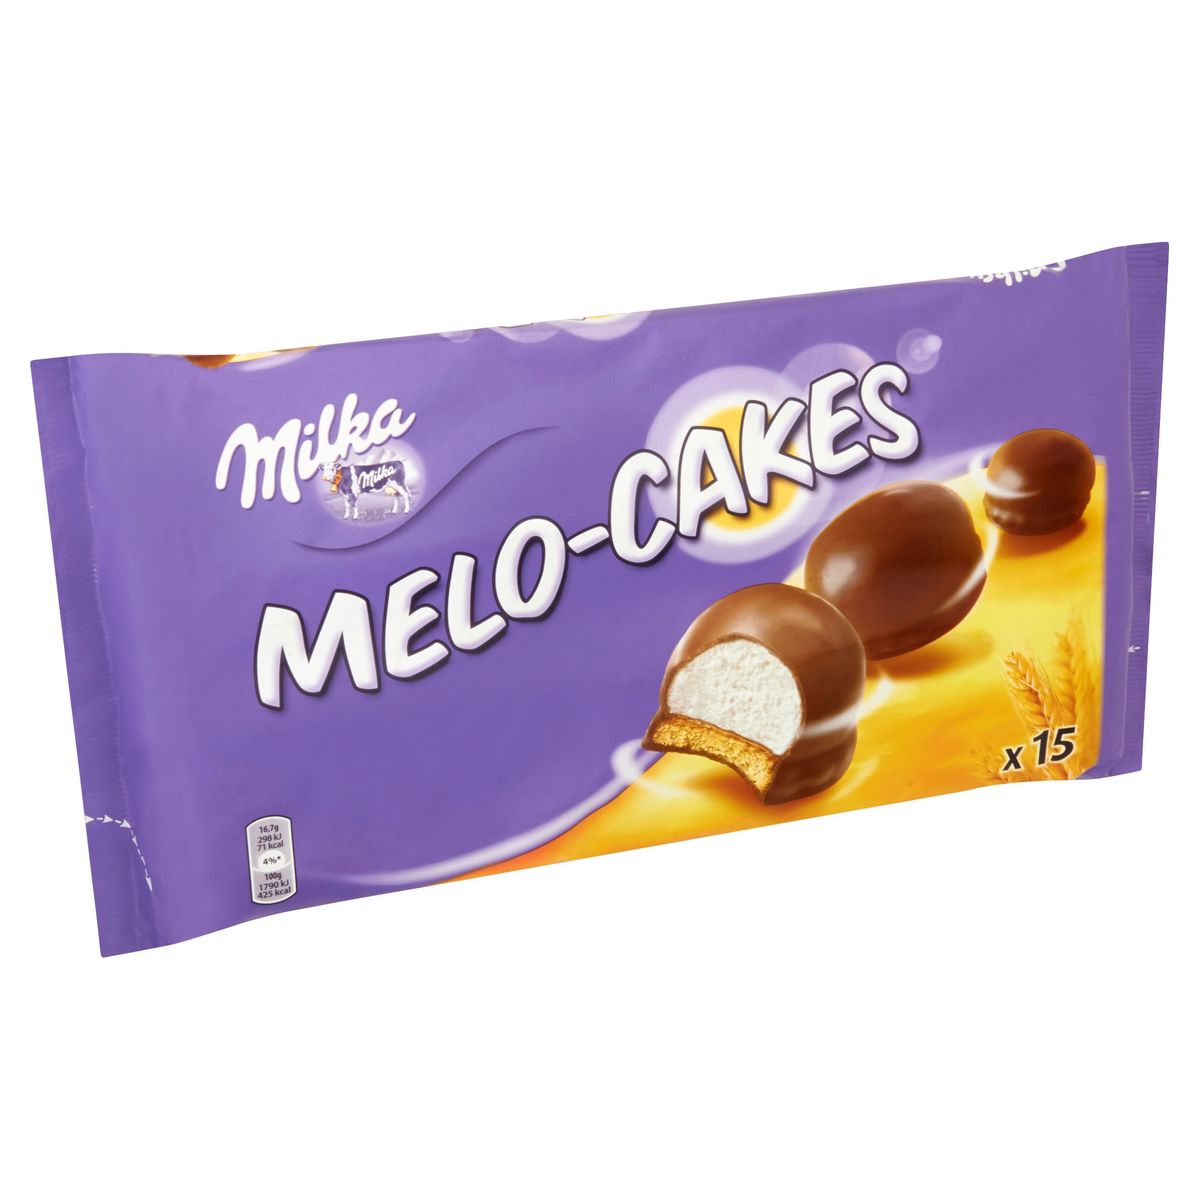 Milka Melo-Cakes Biscuits Au Chocolat Pralines 15 Pcs 250 g